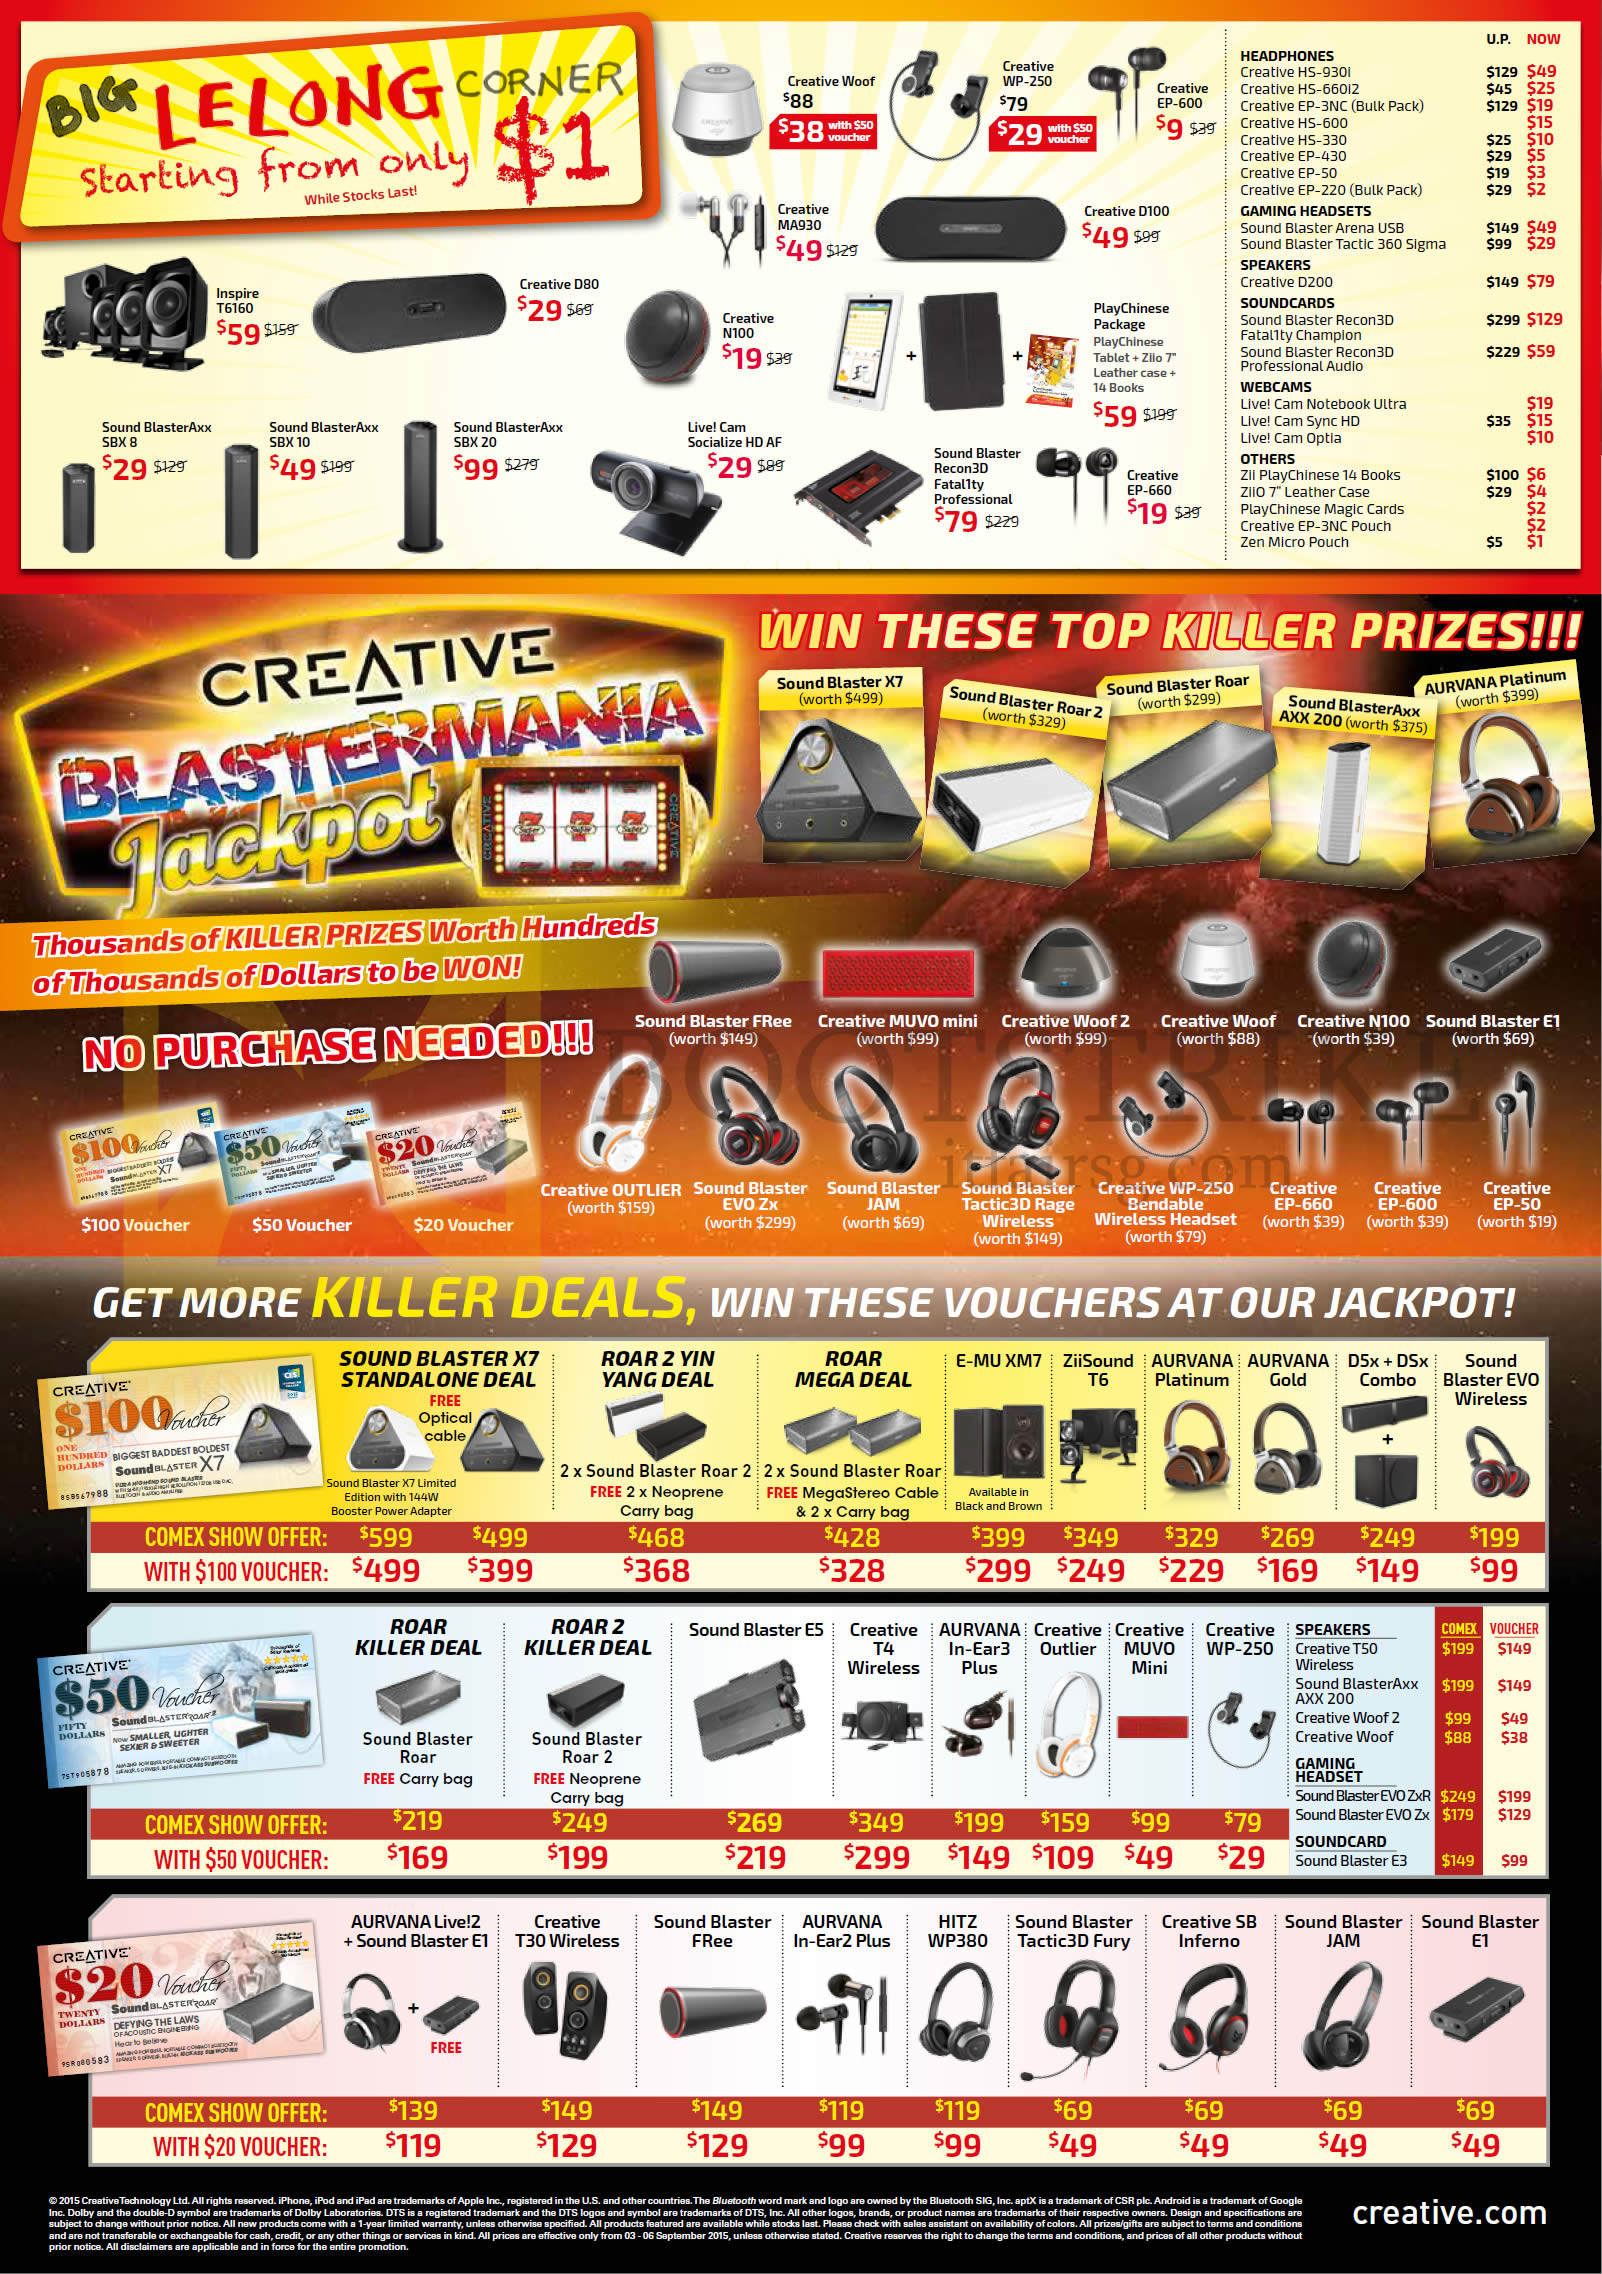 COMEX 2015 price list image brochure of Creative Lelong Corner, Voucher Offers